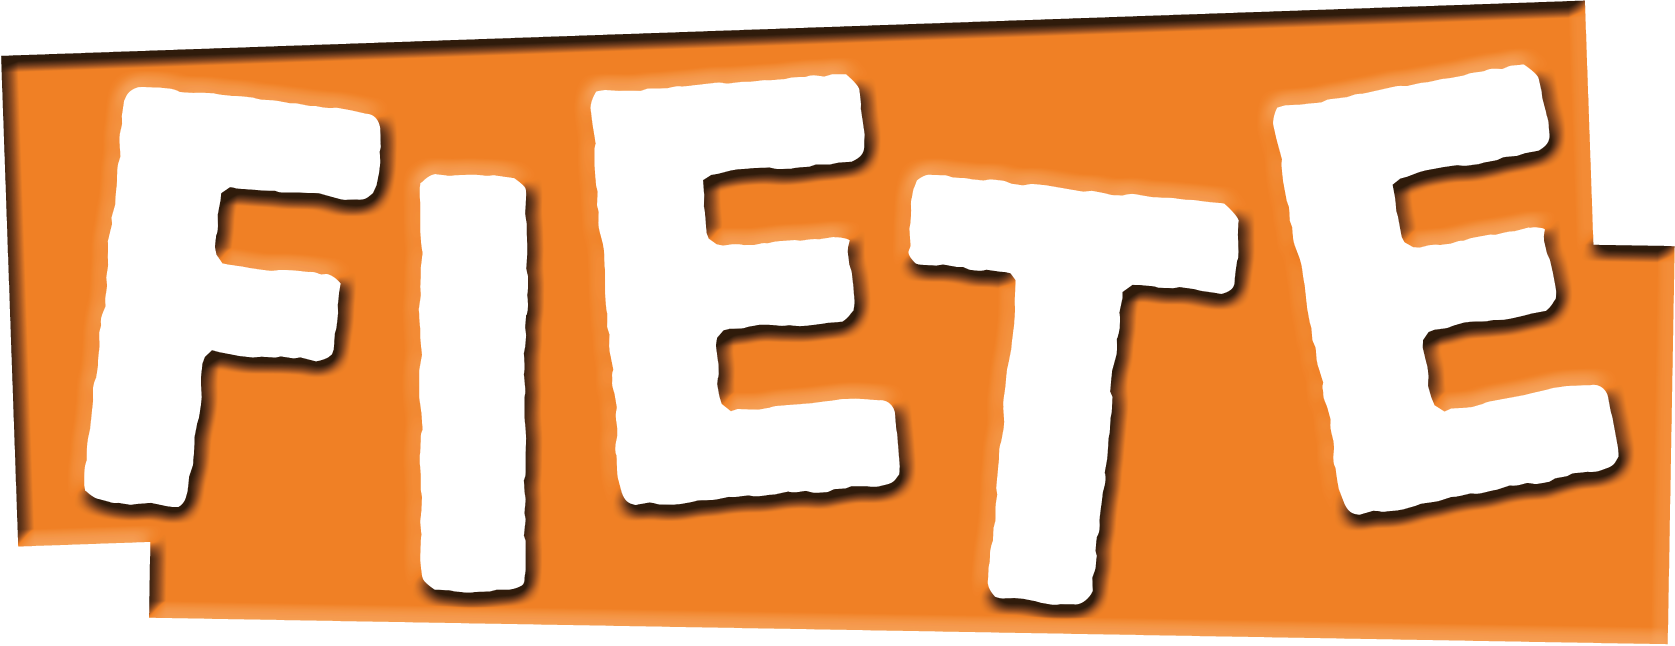 Logo of Fiete company